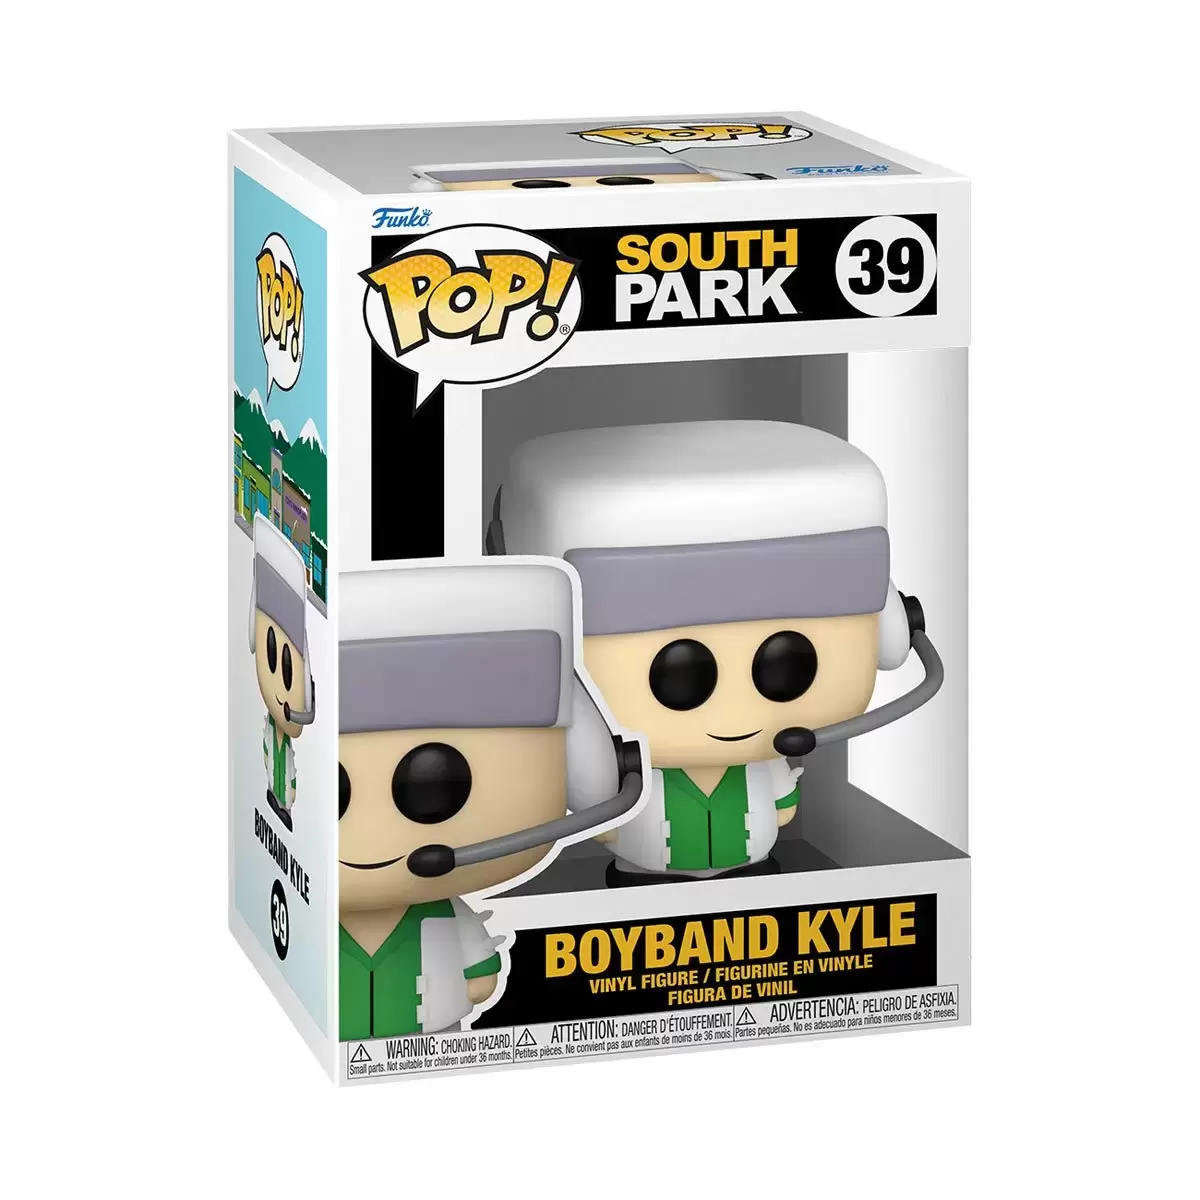 POP! South Park - South Park - Boyband Kyle